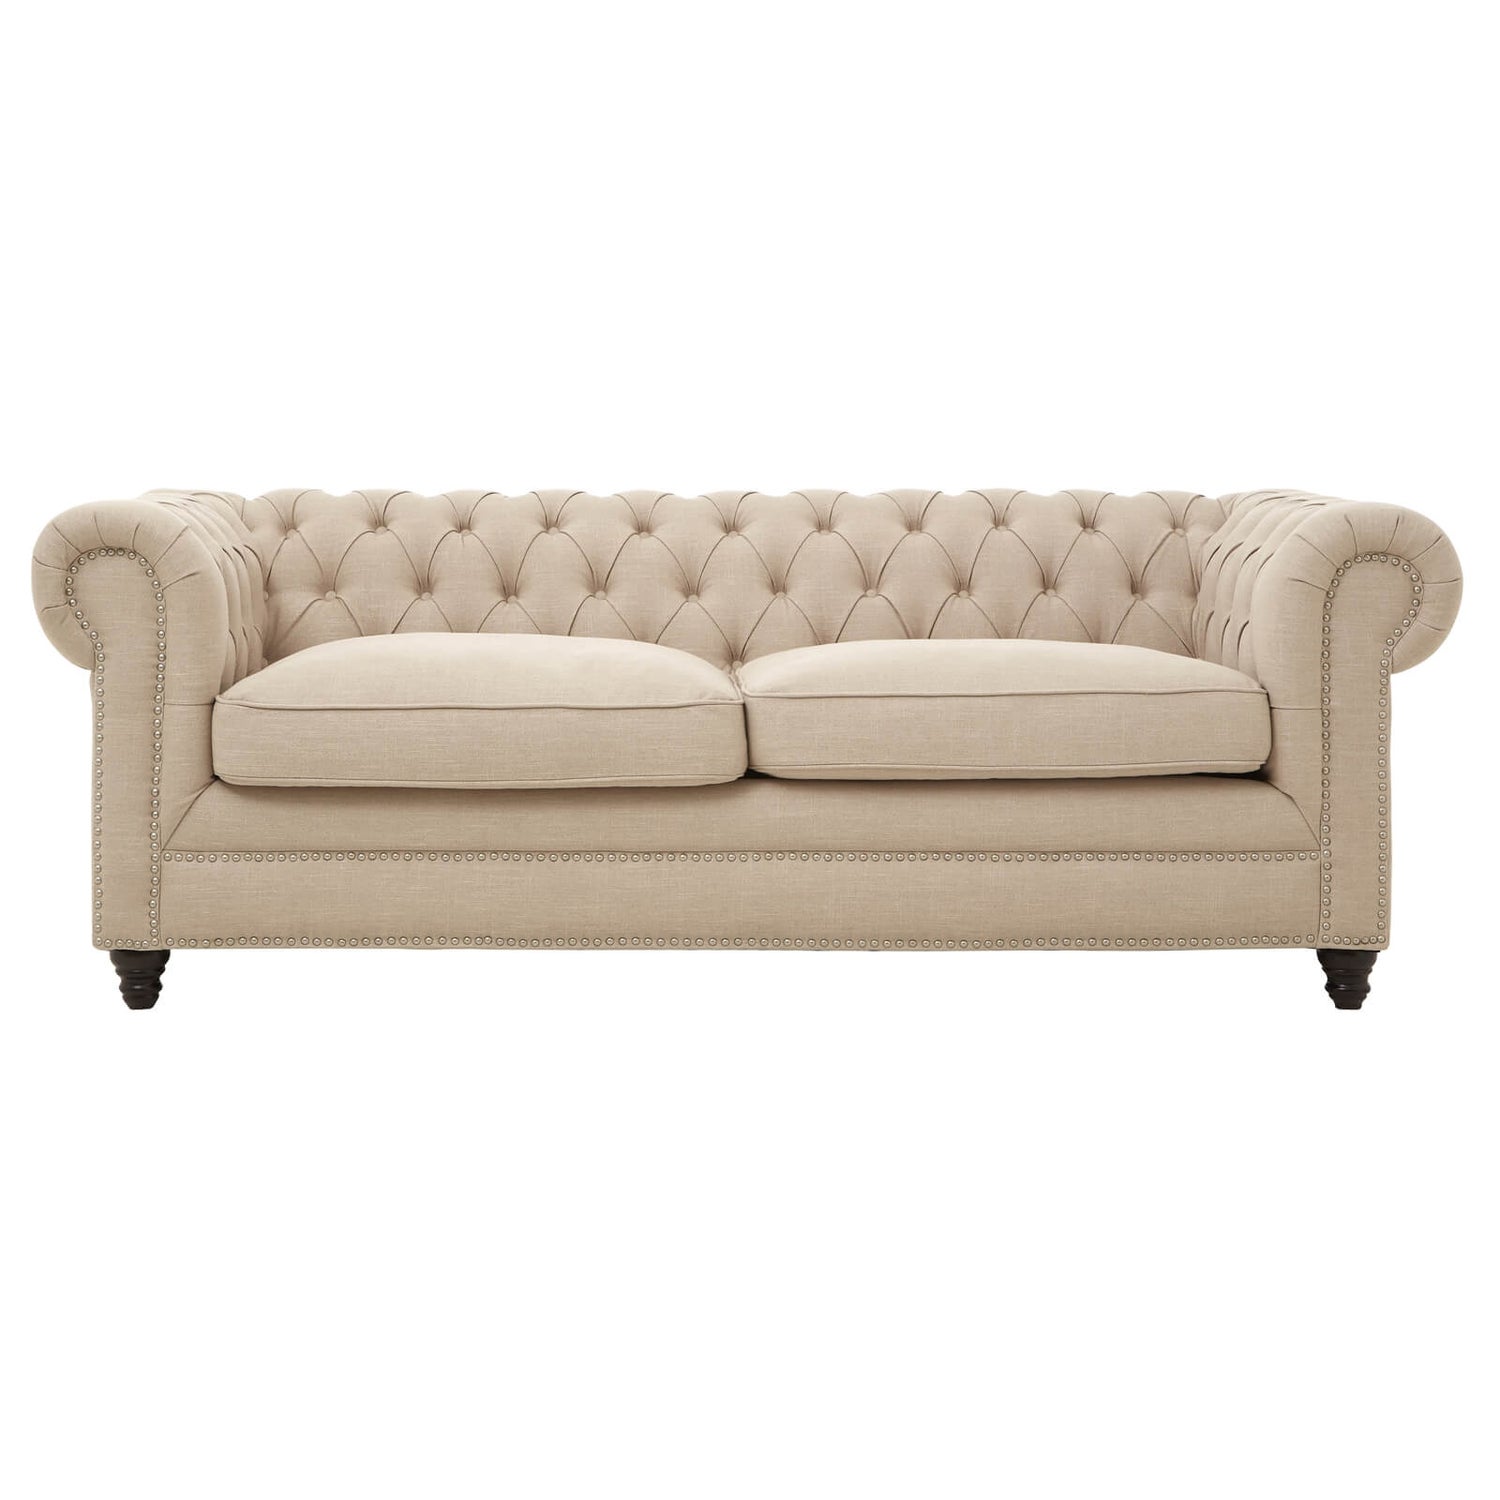 Stella 3 Seater Linen Sofa - Beige | Homebase